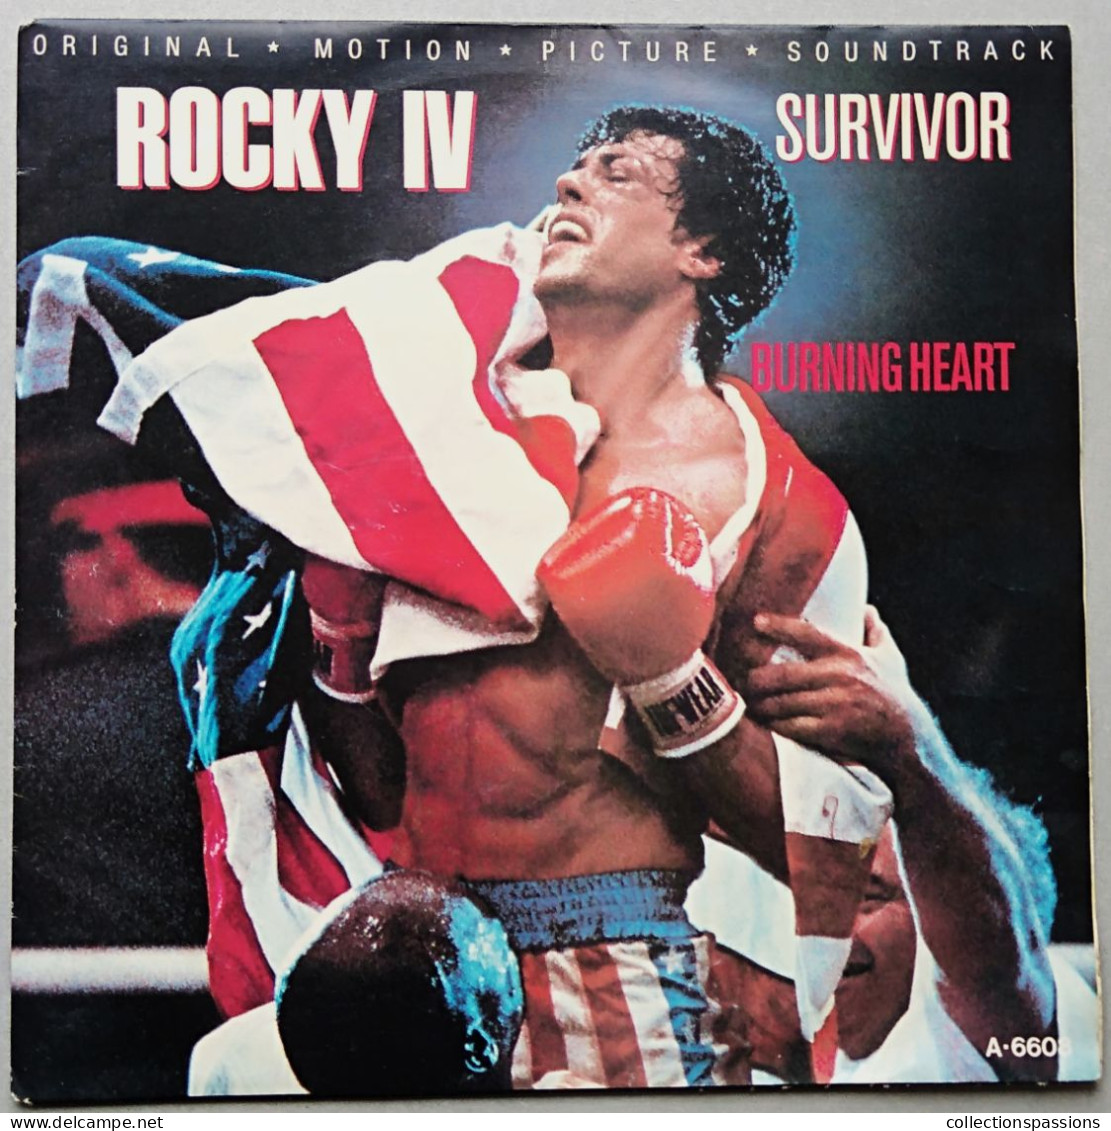 - SURVIVOR - Burning Heart - Musique Du Film Rocky IV Avec Sylvester Stallone - - Soundtracks, Film Music